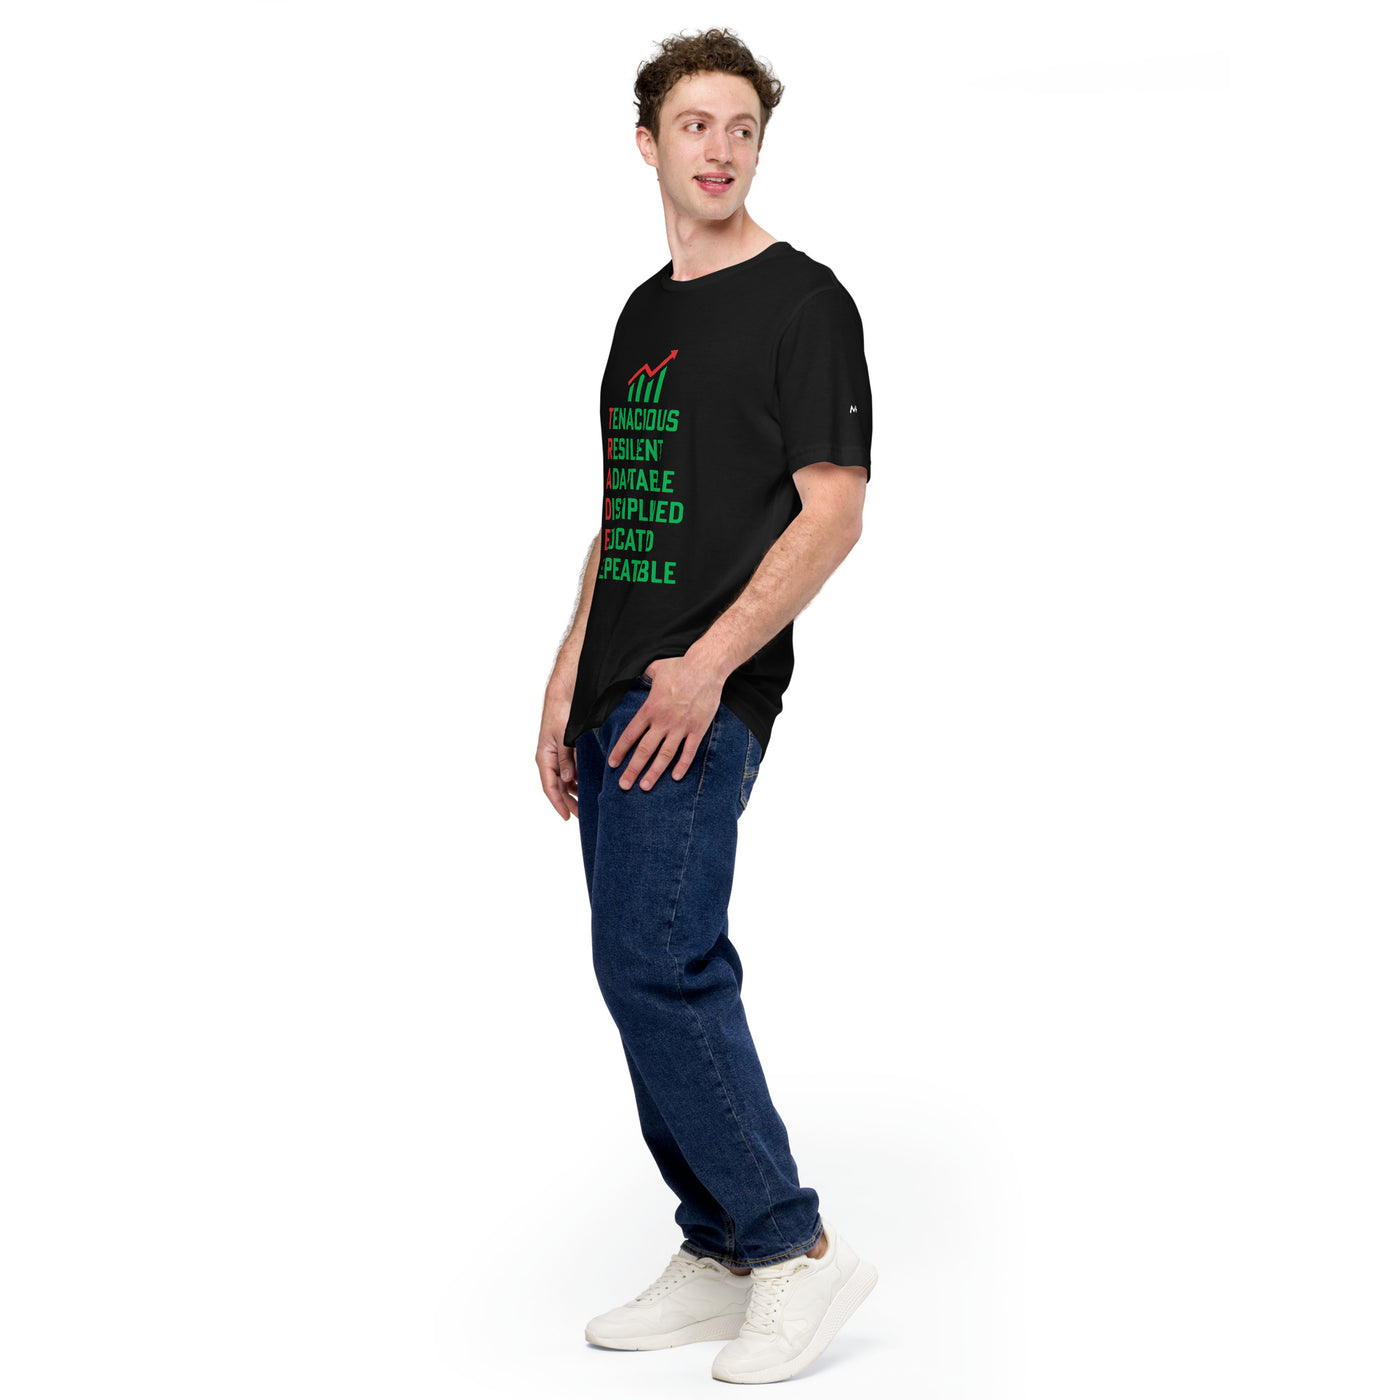 Trader Def: - Unisex t-shirt